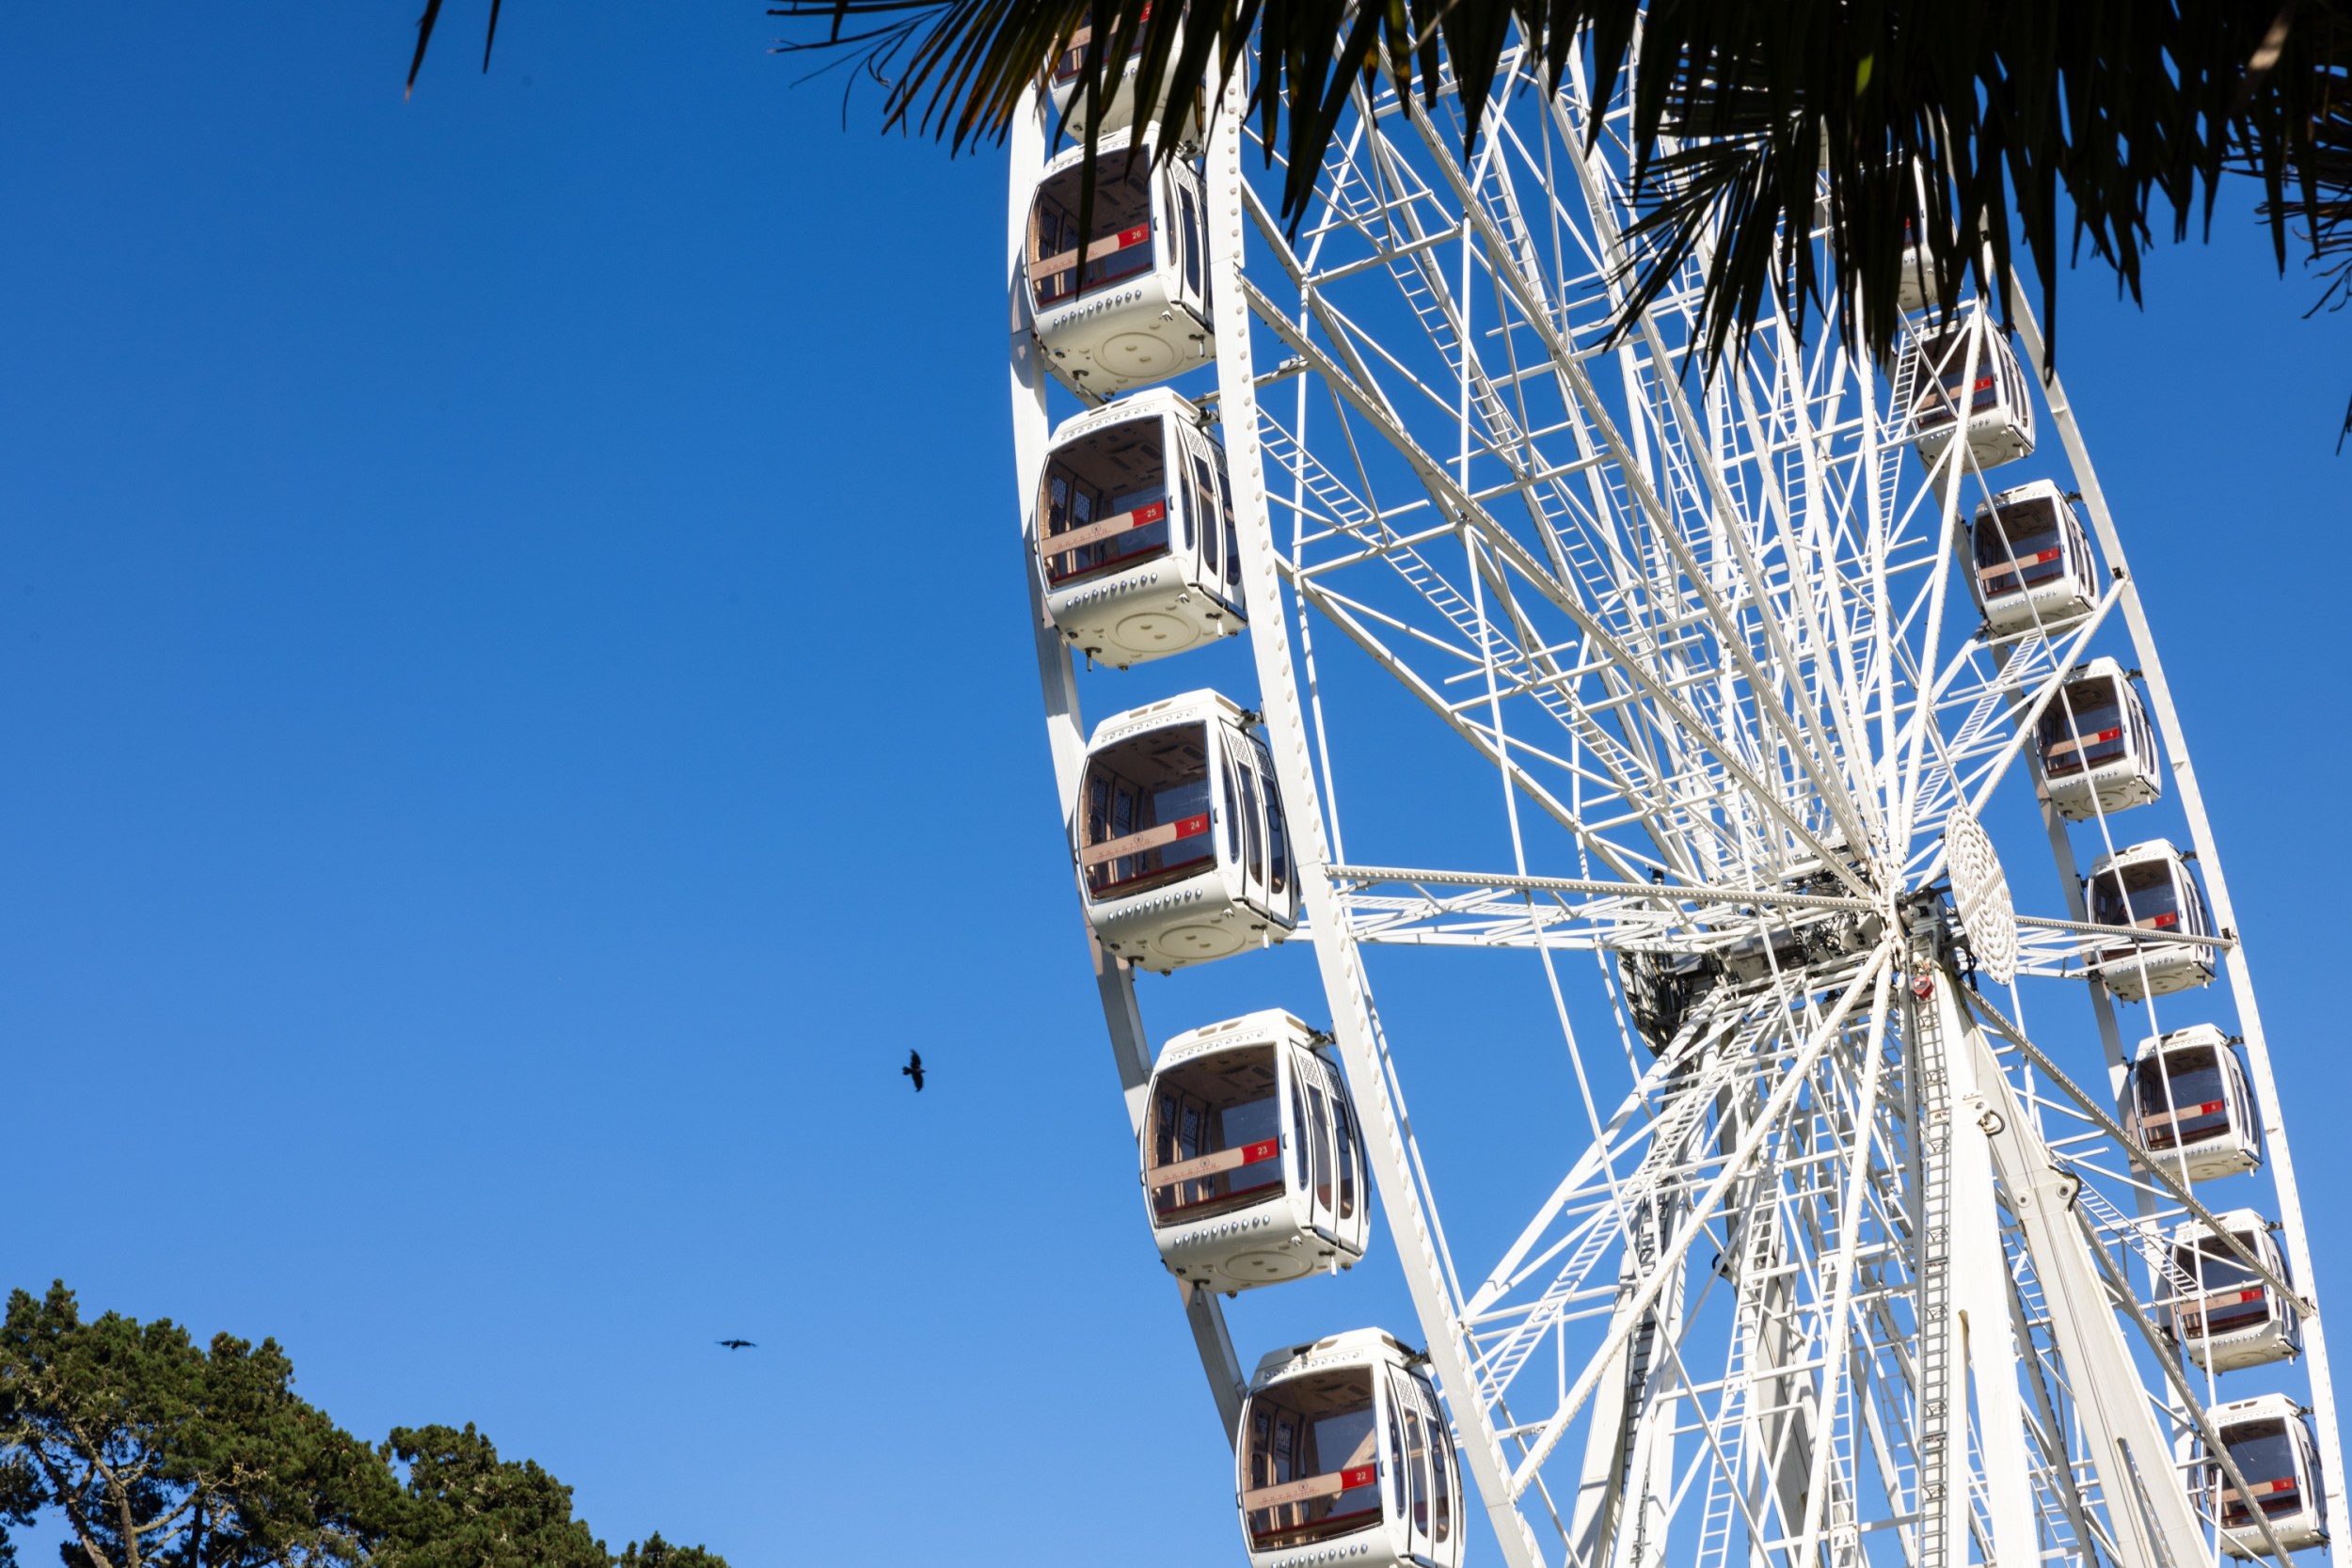 News Flash • Skystar Ferris Wheel Opens at Fisherman's Wharf